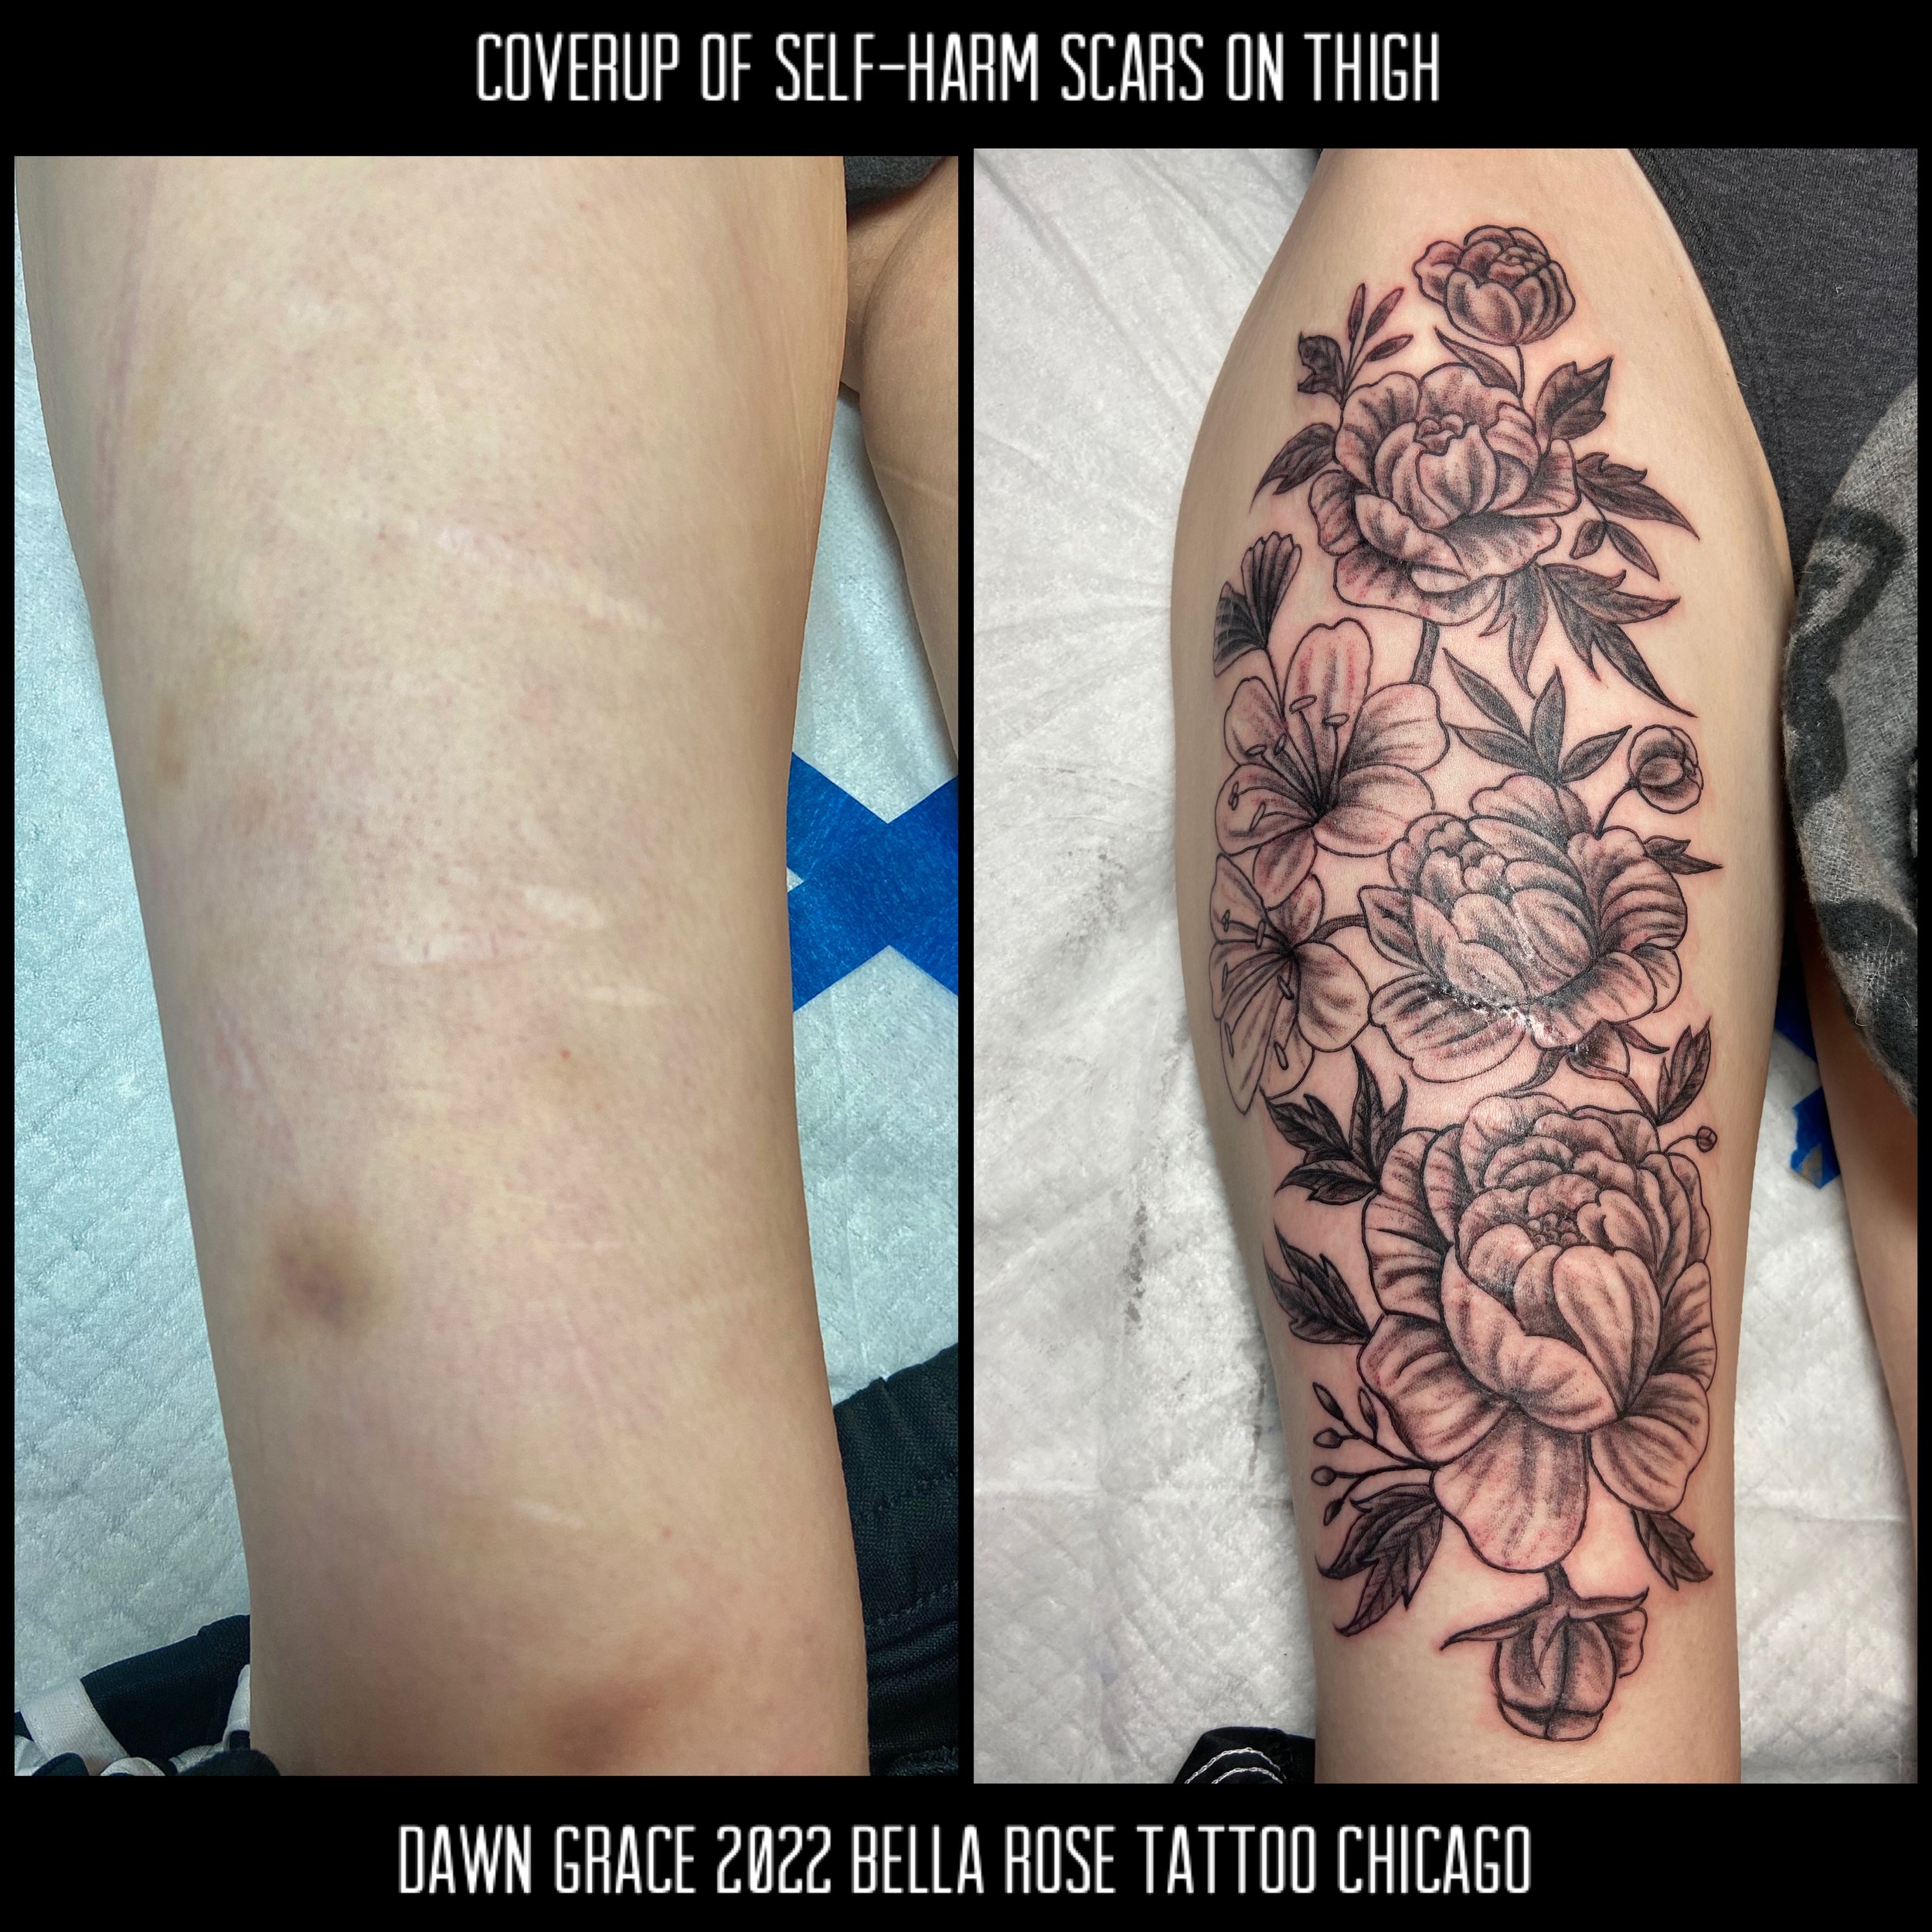 Tattoo ideas for cutting scars